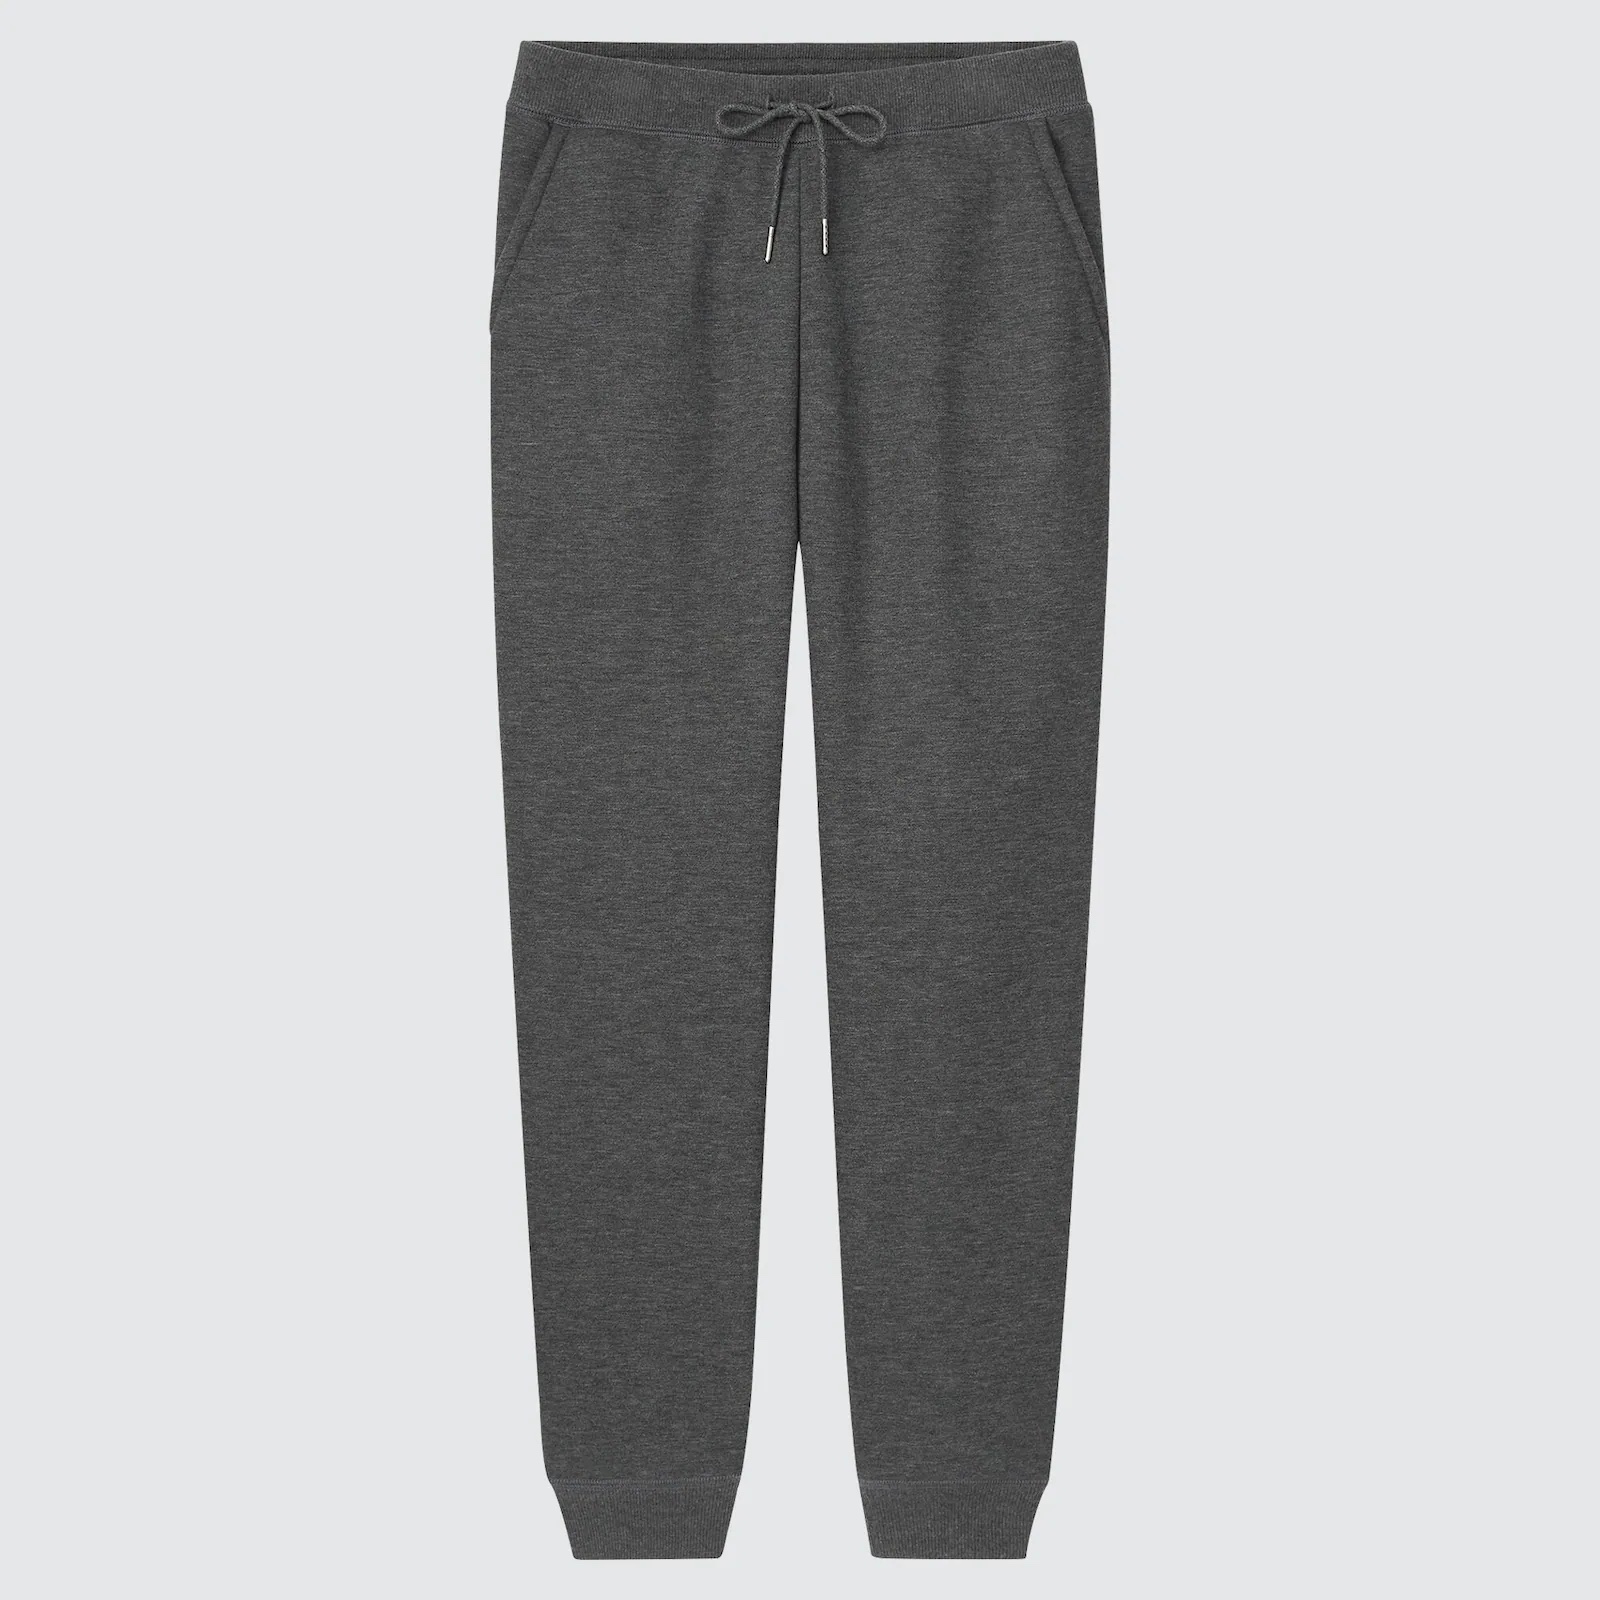 Dark grey sweatpants on a grey background